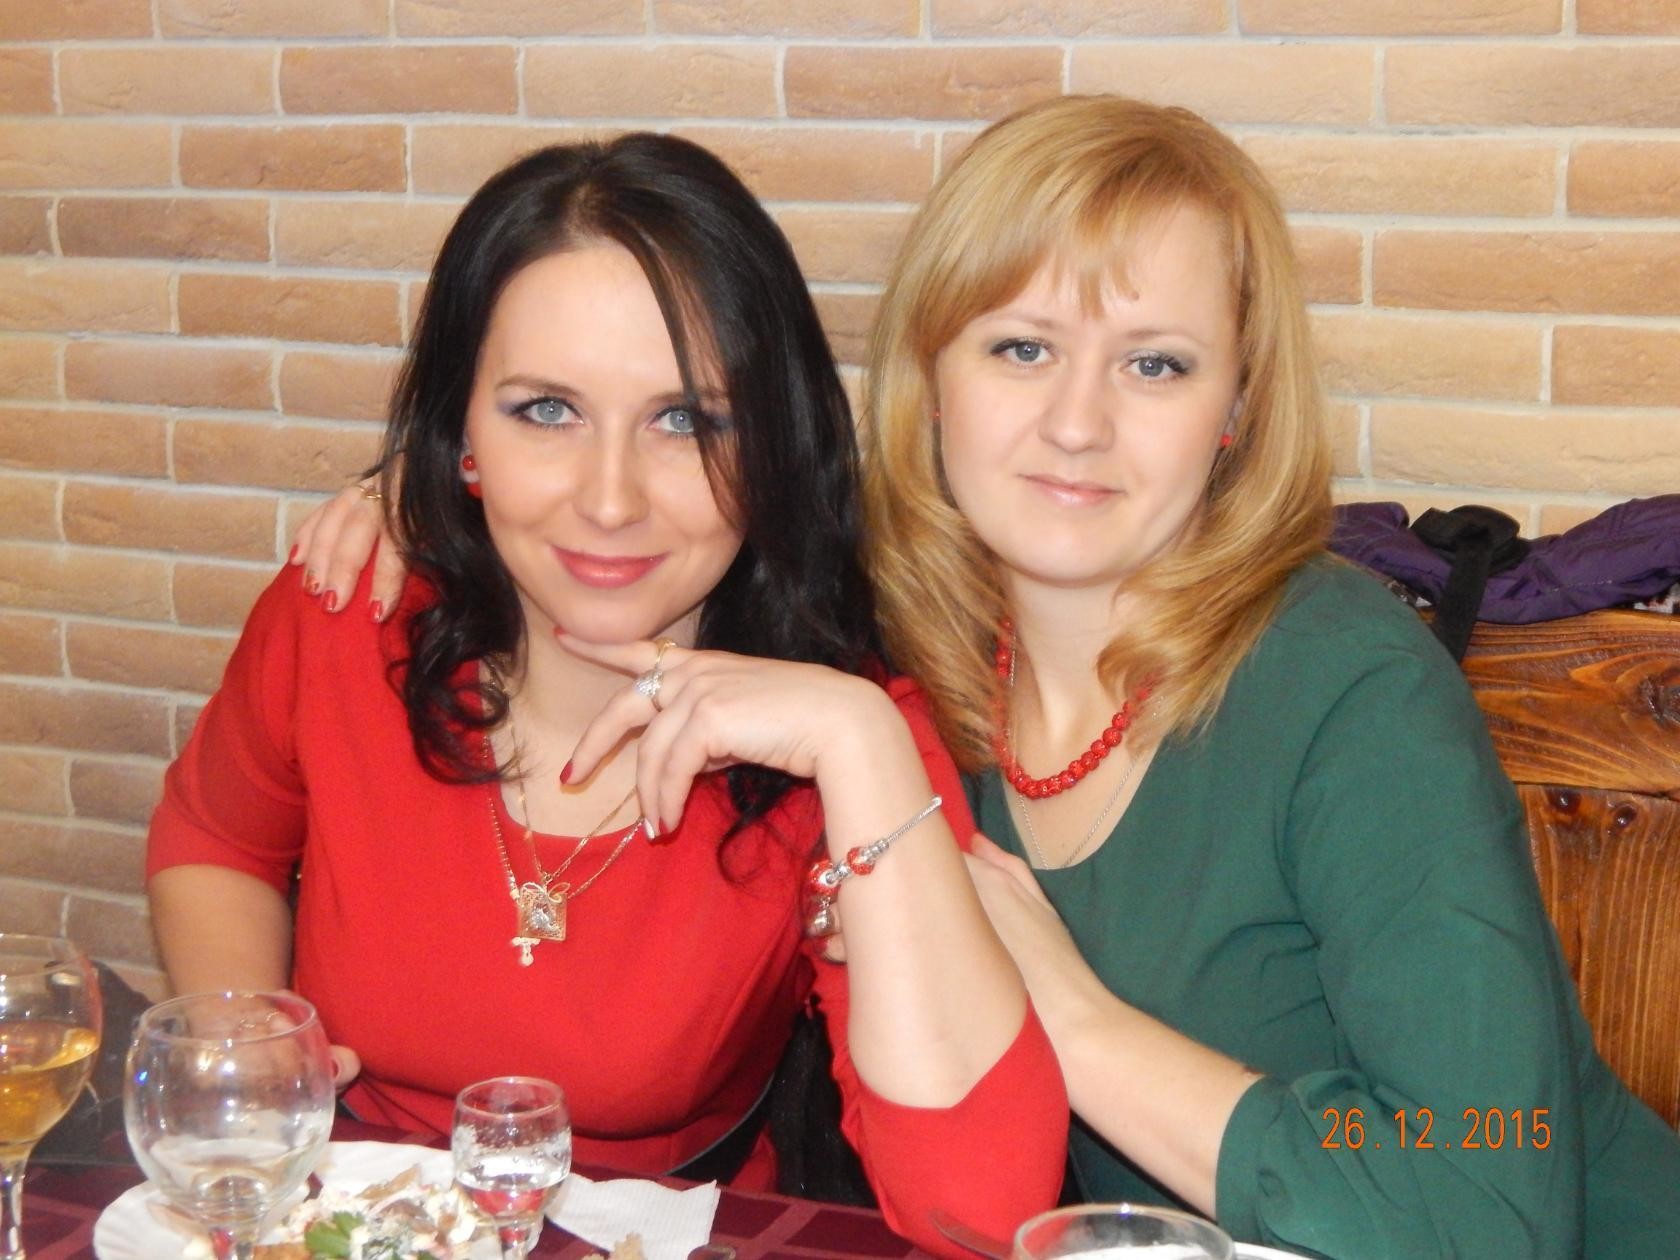 Наталья Ш. (слева). Фото: Соцсети 